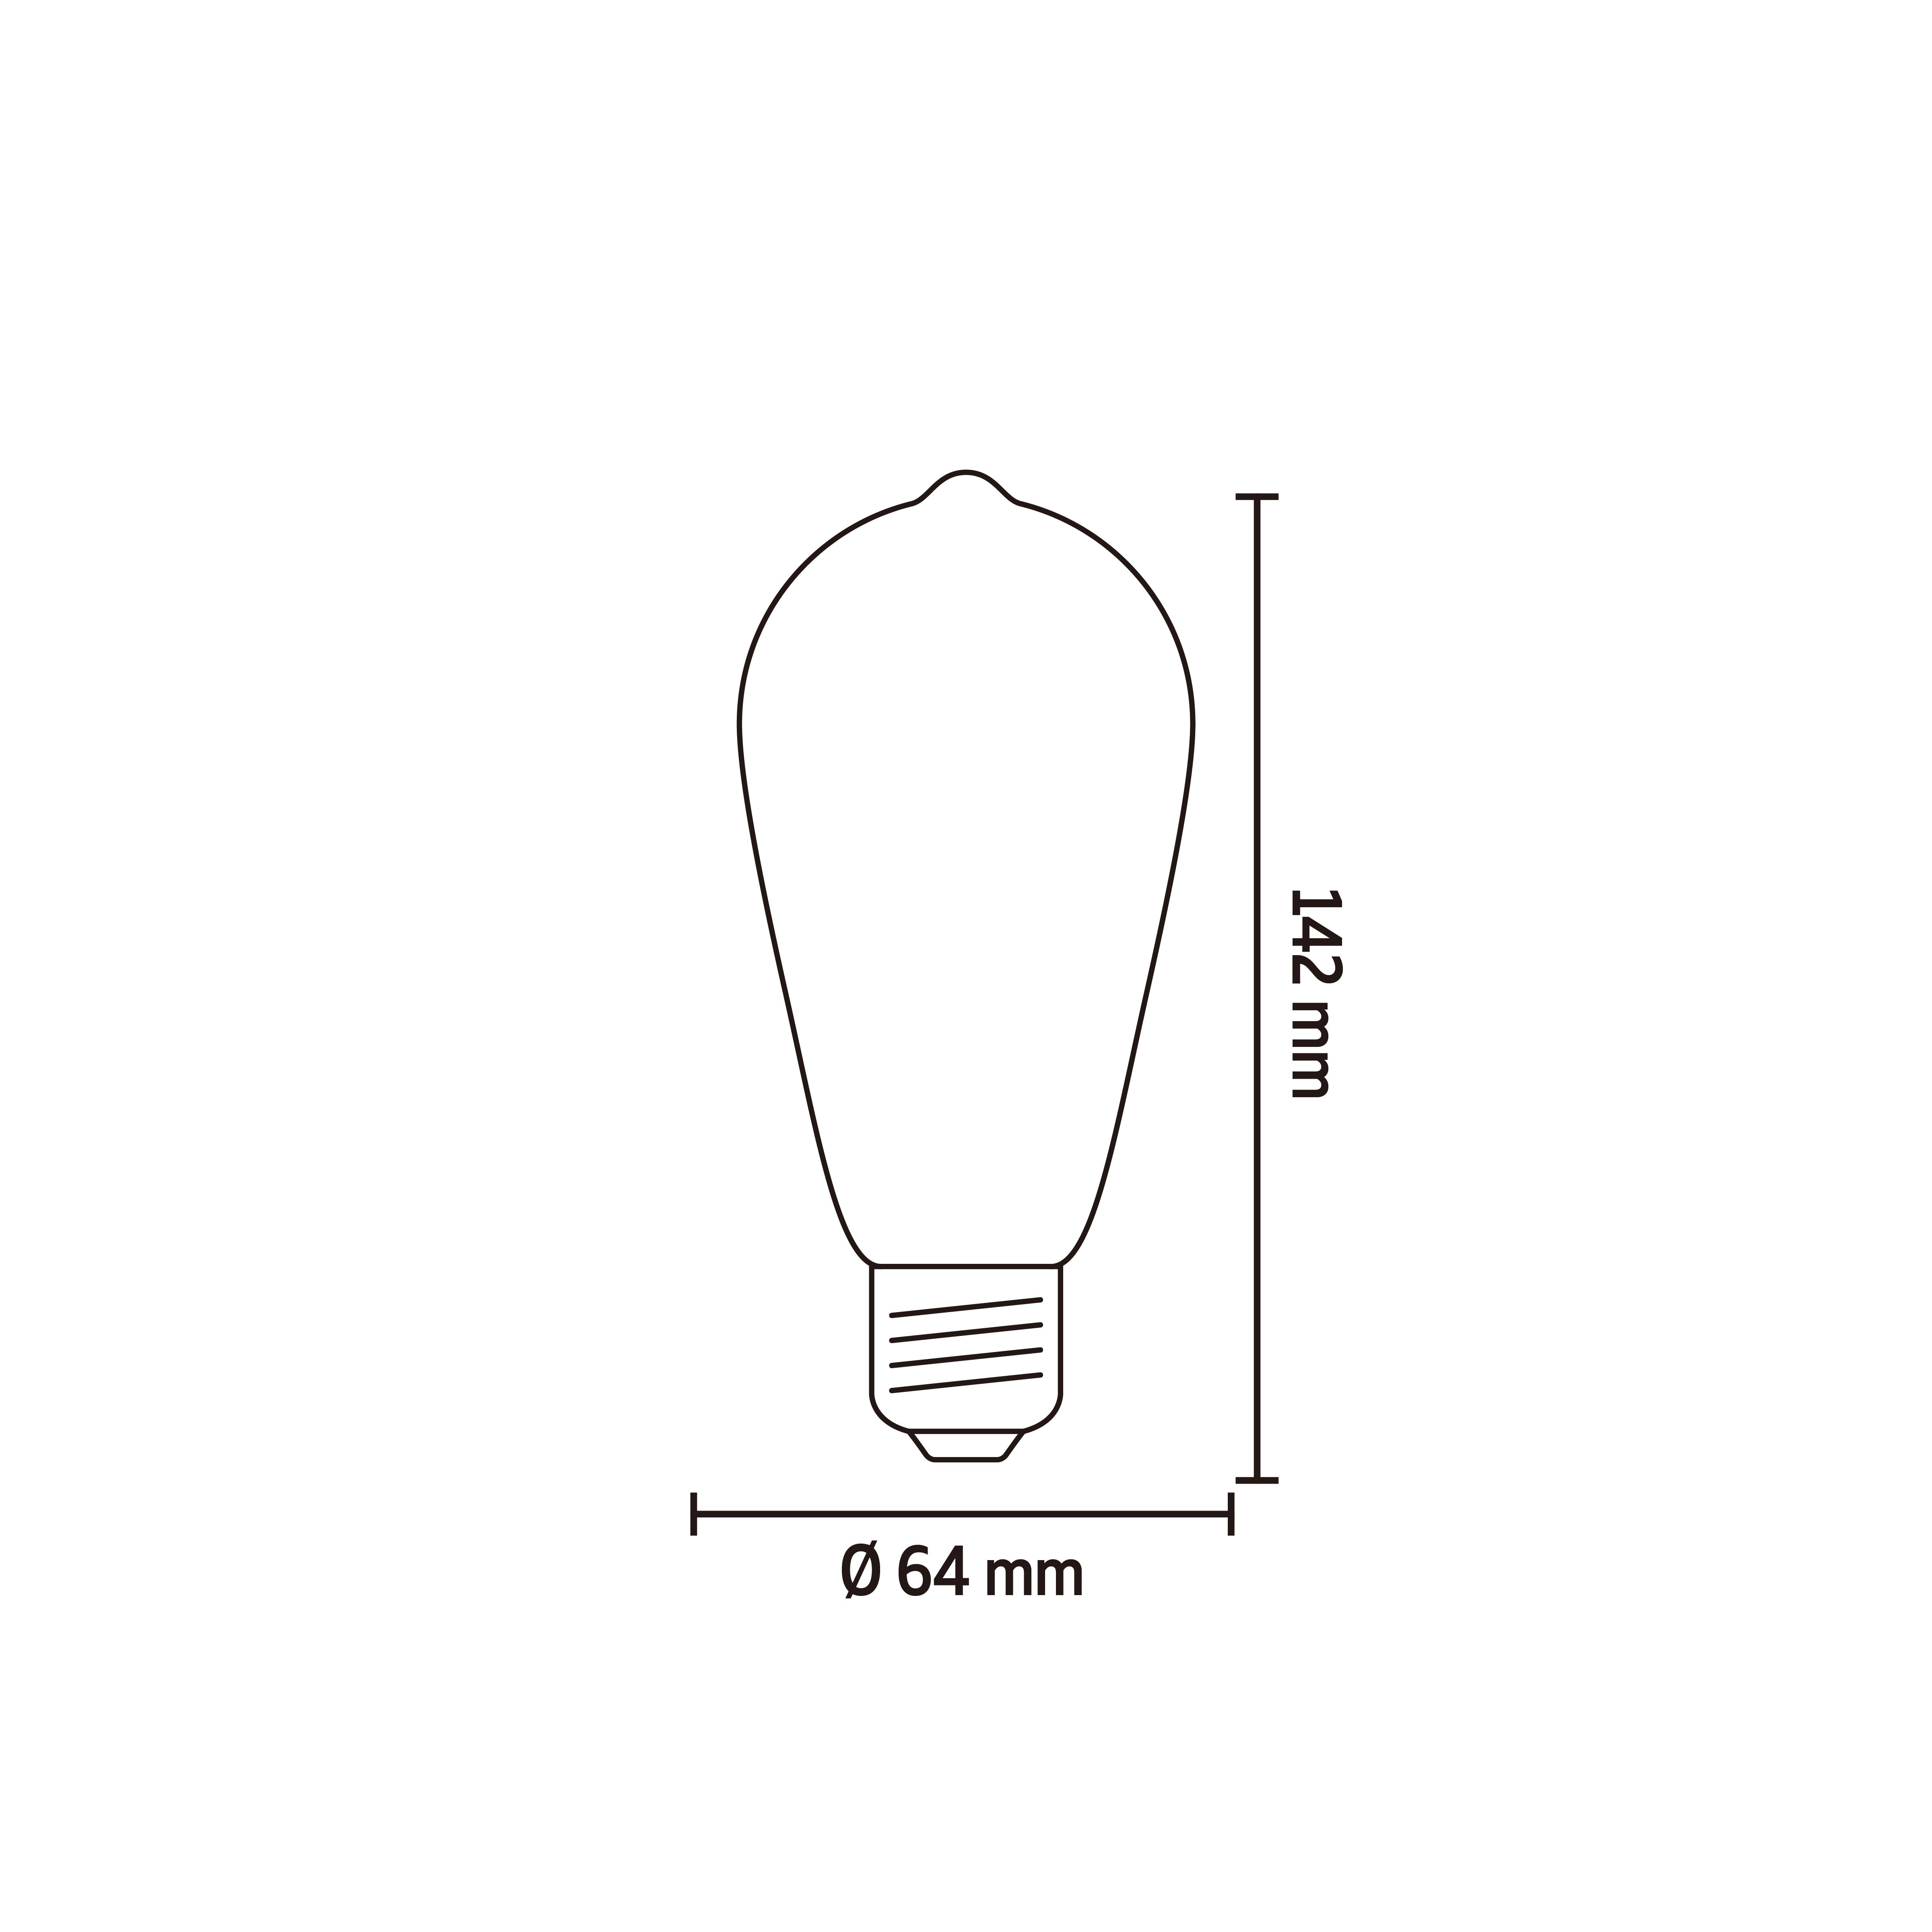 CALEX E27 2W 280lm Clear ST64 Extra warm white LED Filament Light bulb